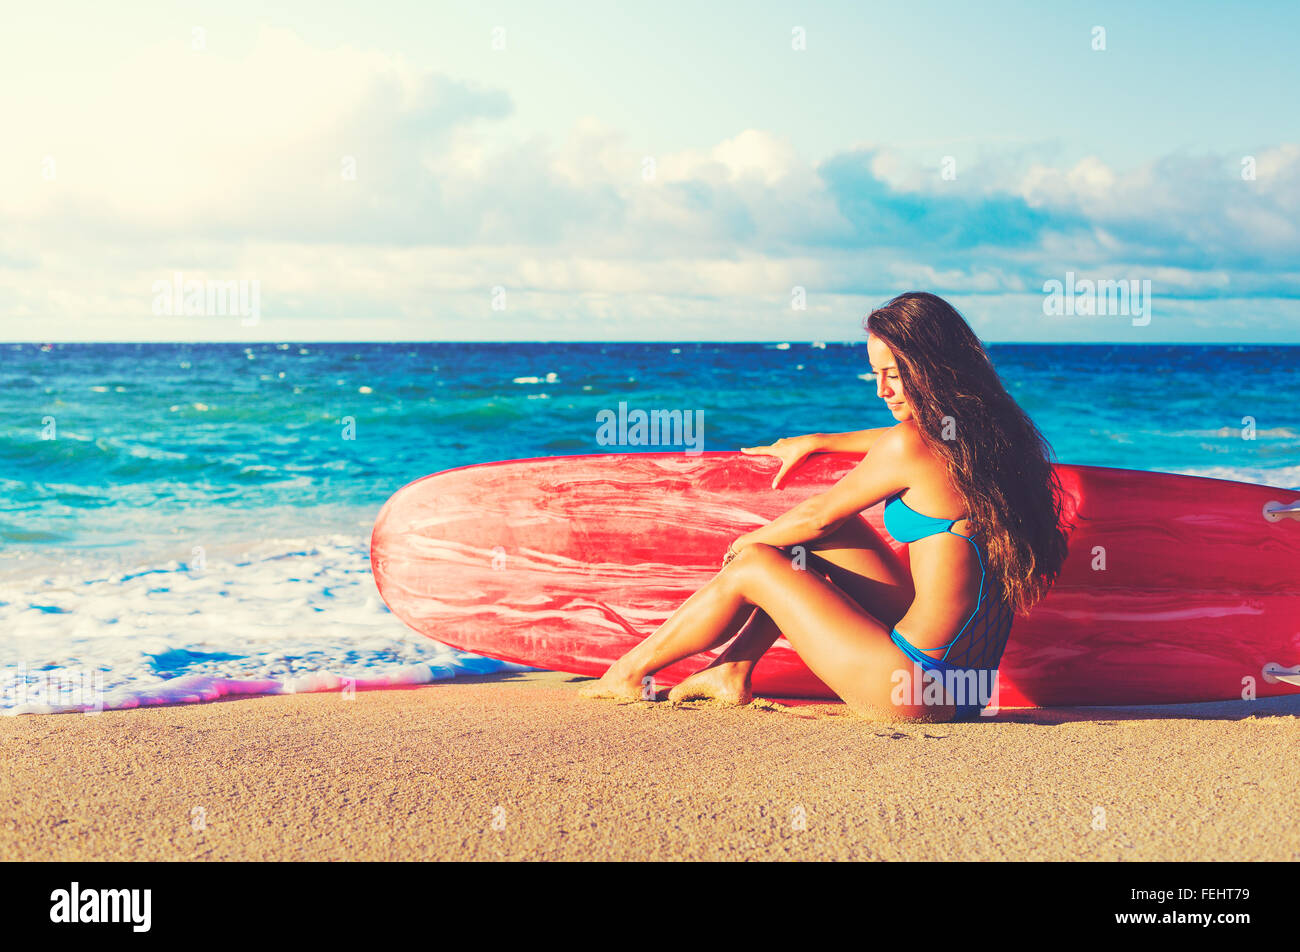 Beautiful Surfer Girl on the Beach at Sunset. Summer Fun Outdoor Lifestyle. Stock Photo